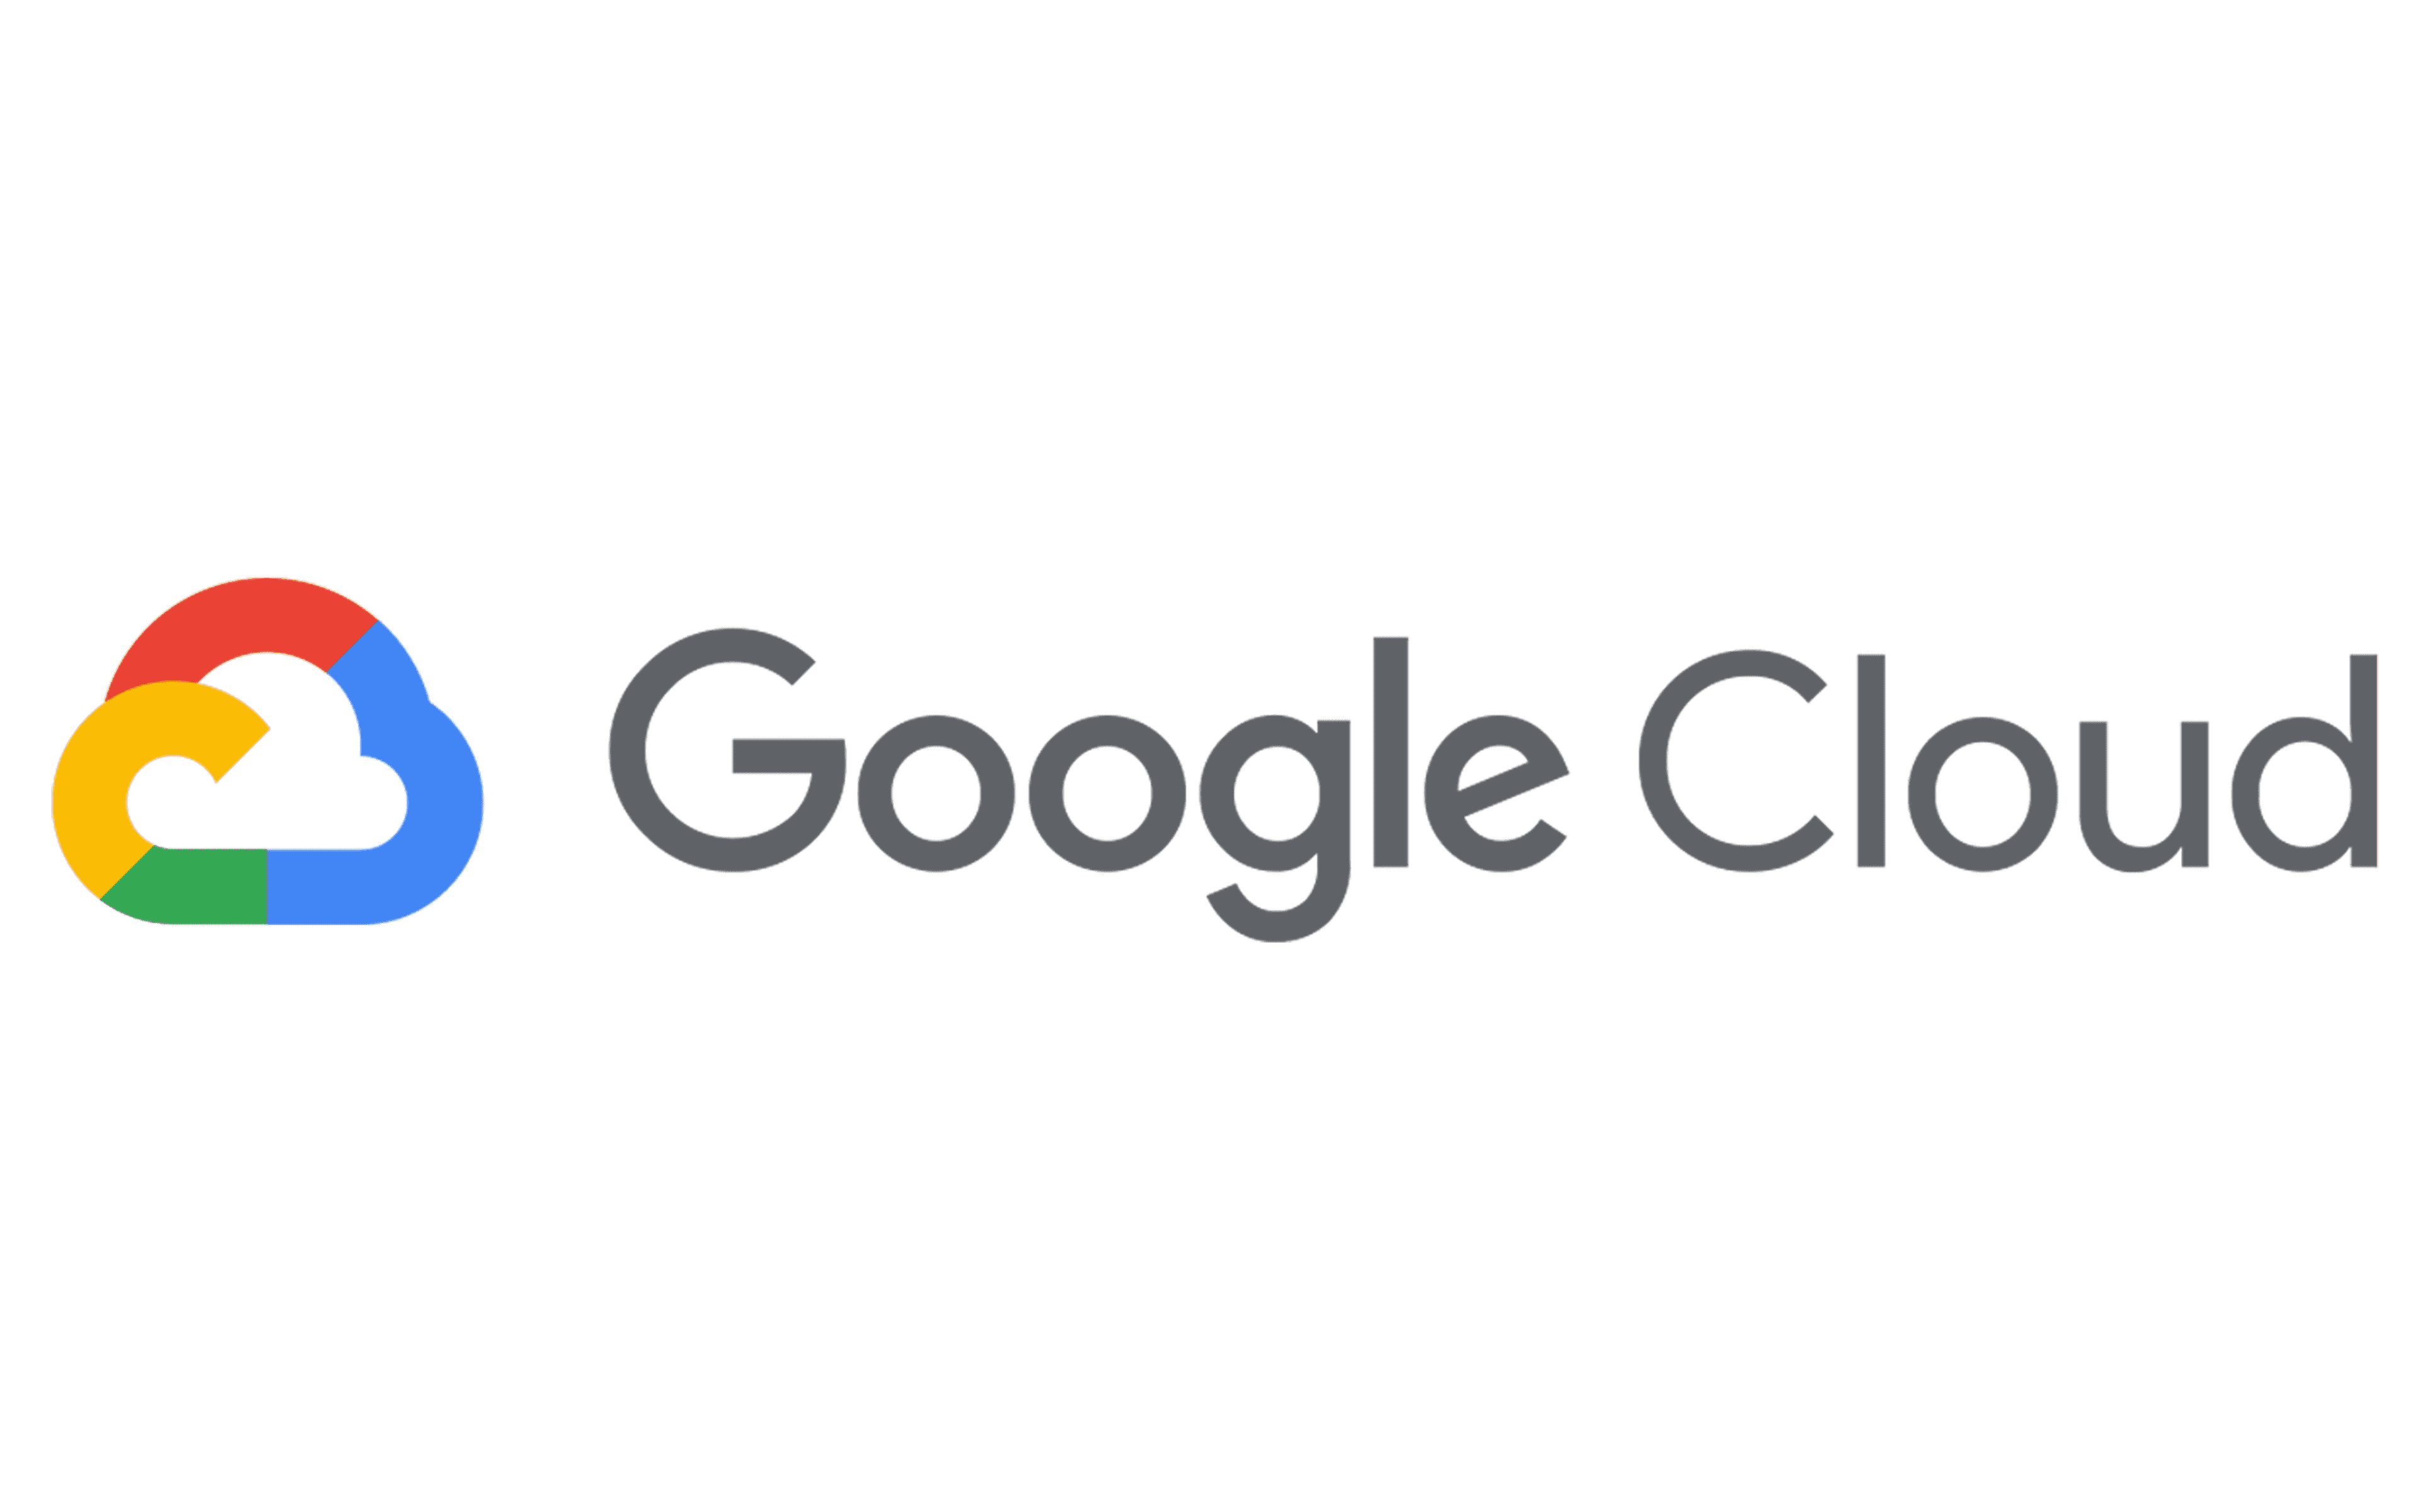 Logo Google Cloud